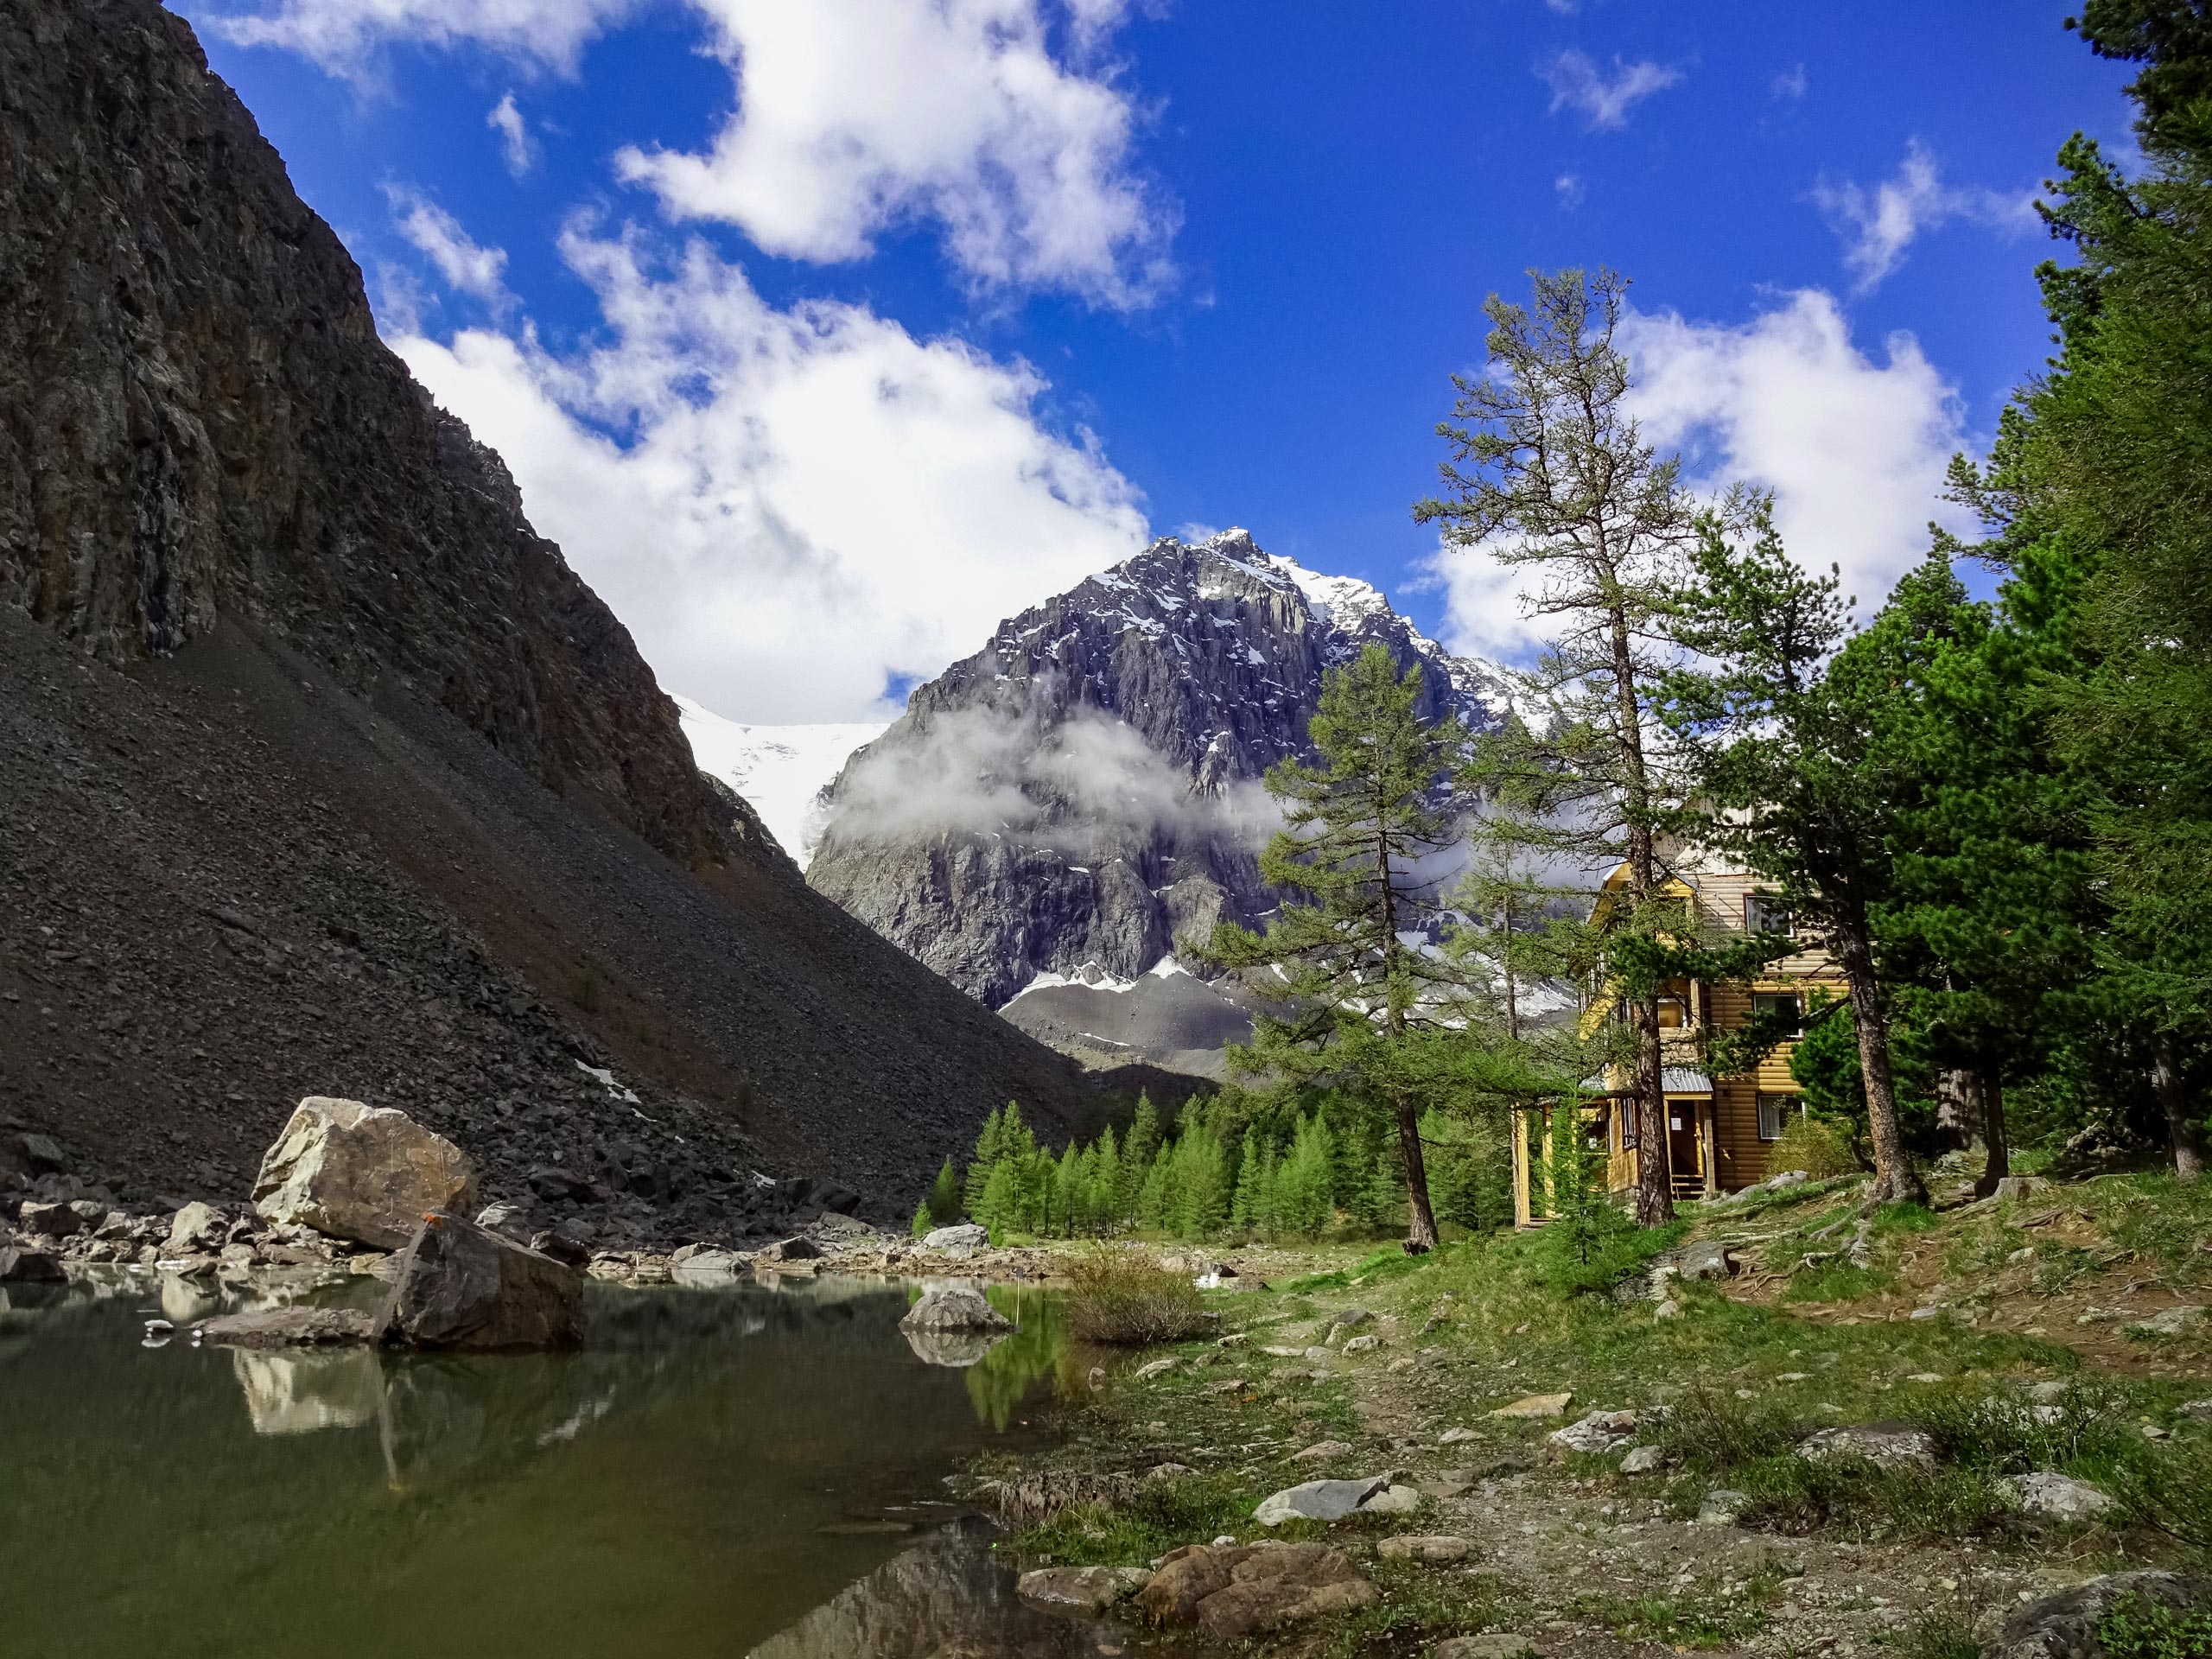 Alpine lake and cabin hidden in Altai mountains Russia